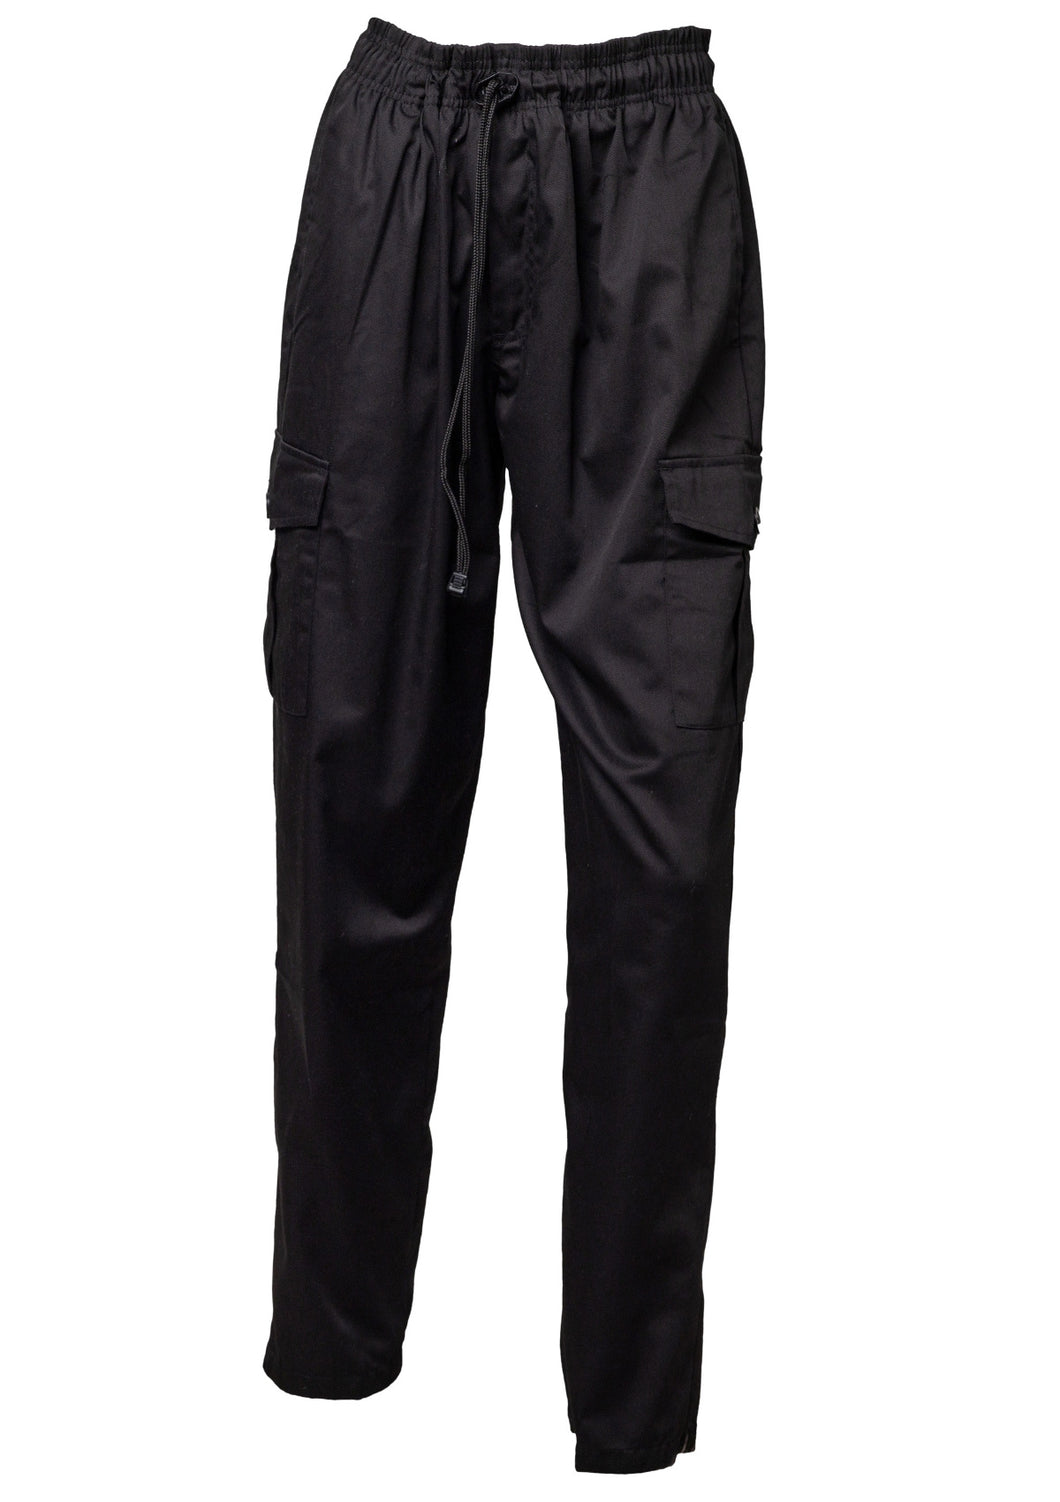 Mens Black Cargo Pants Elastic Waist Drawstring Hip Hop Harem Cropped  Trousers | eBay